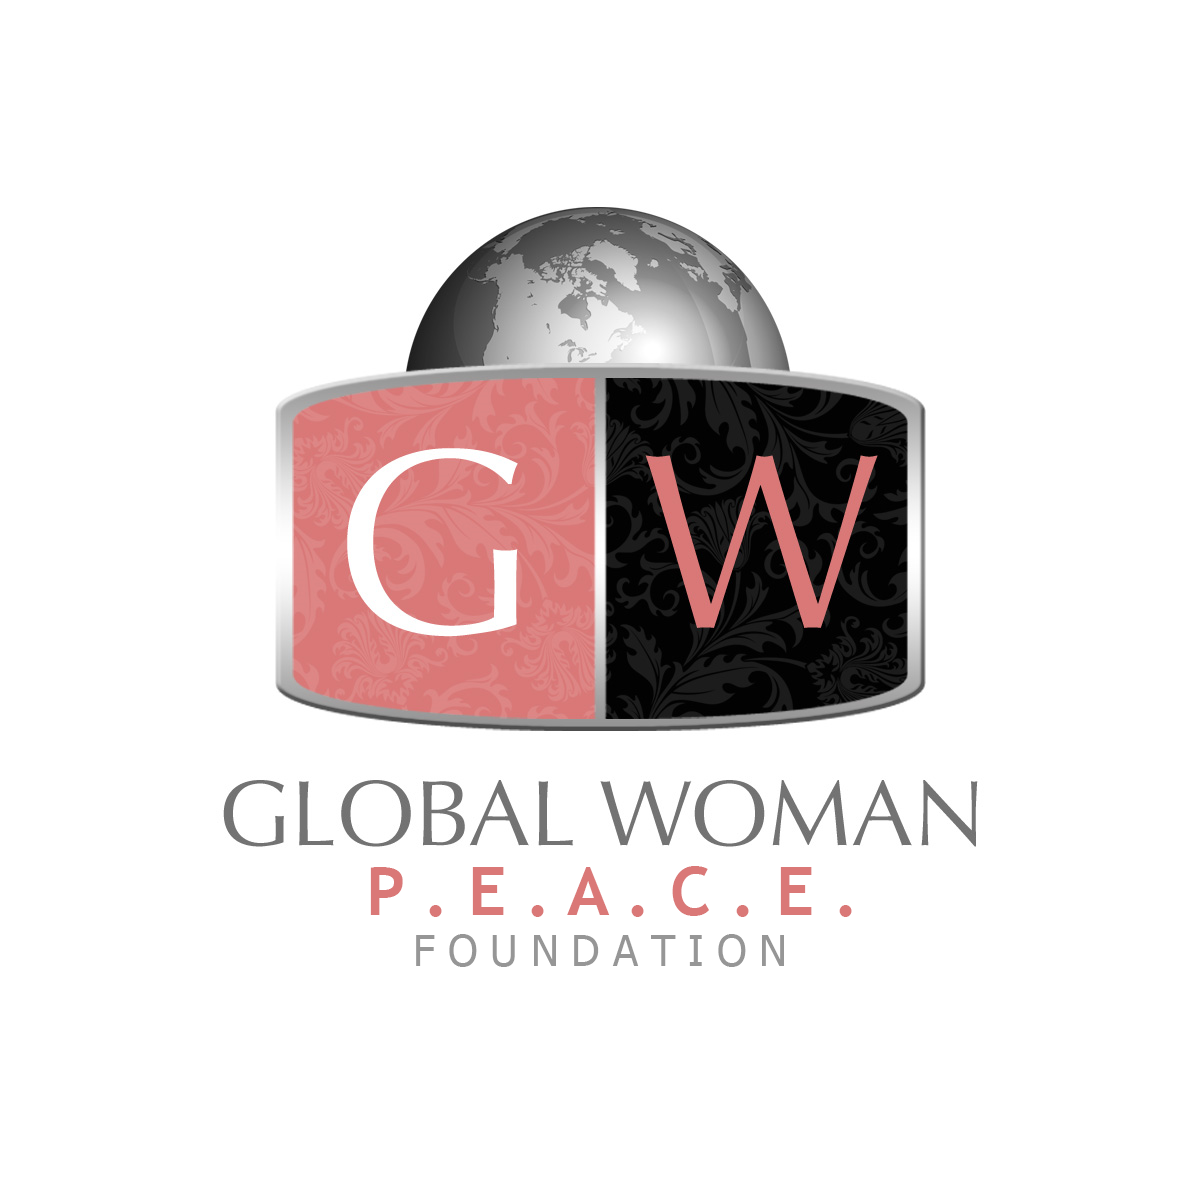 Global Woman P.E.A.C.E. Foundation